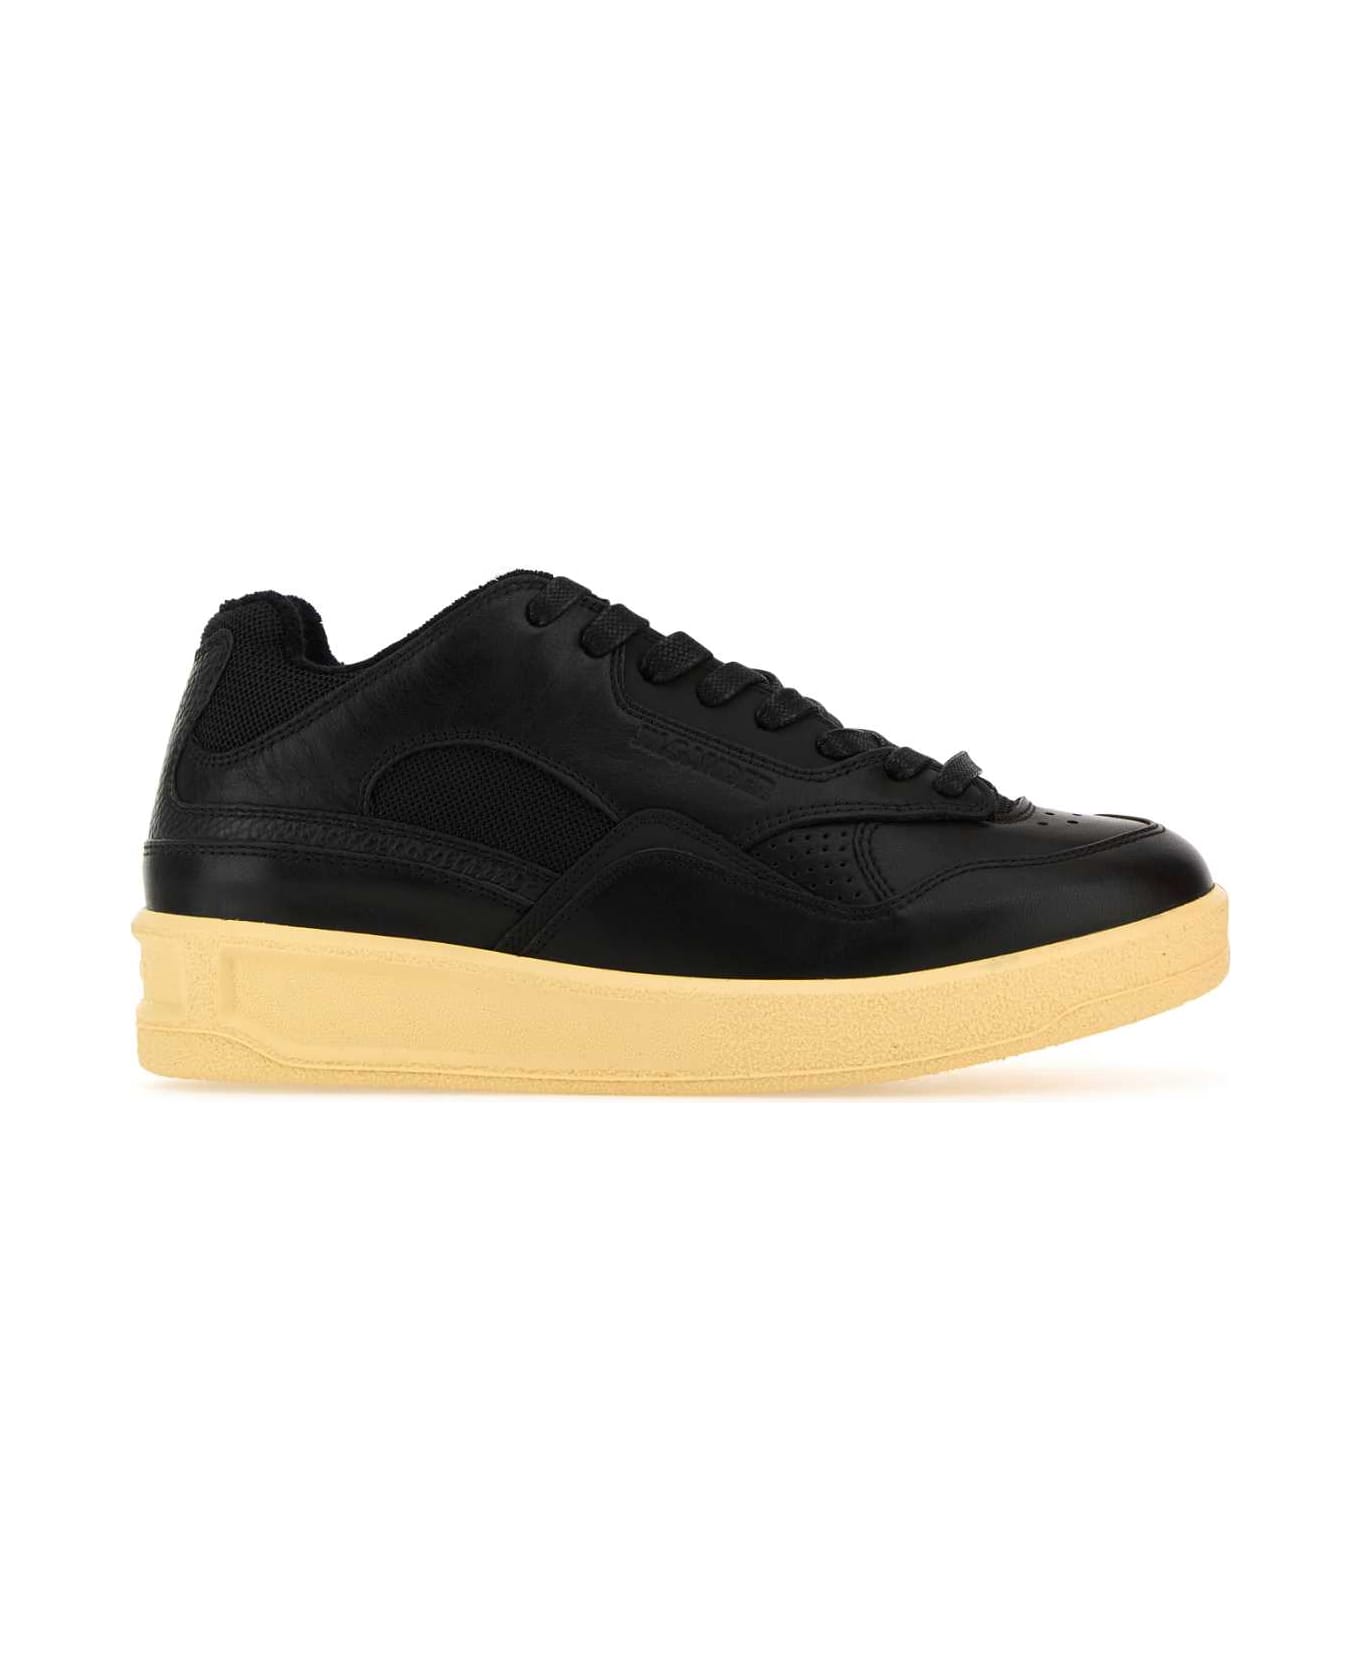 Jil Sander Black Leather And Fabric Basket Sneakers - 001 スニーカー